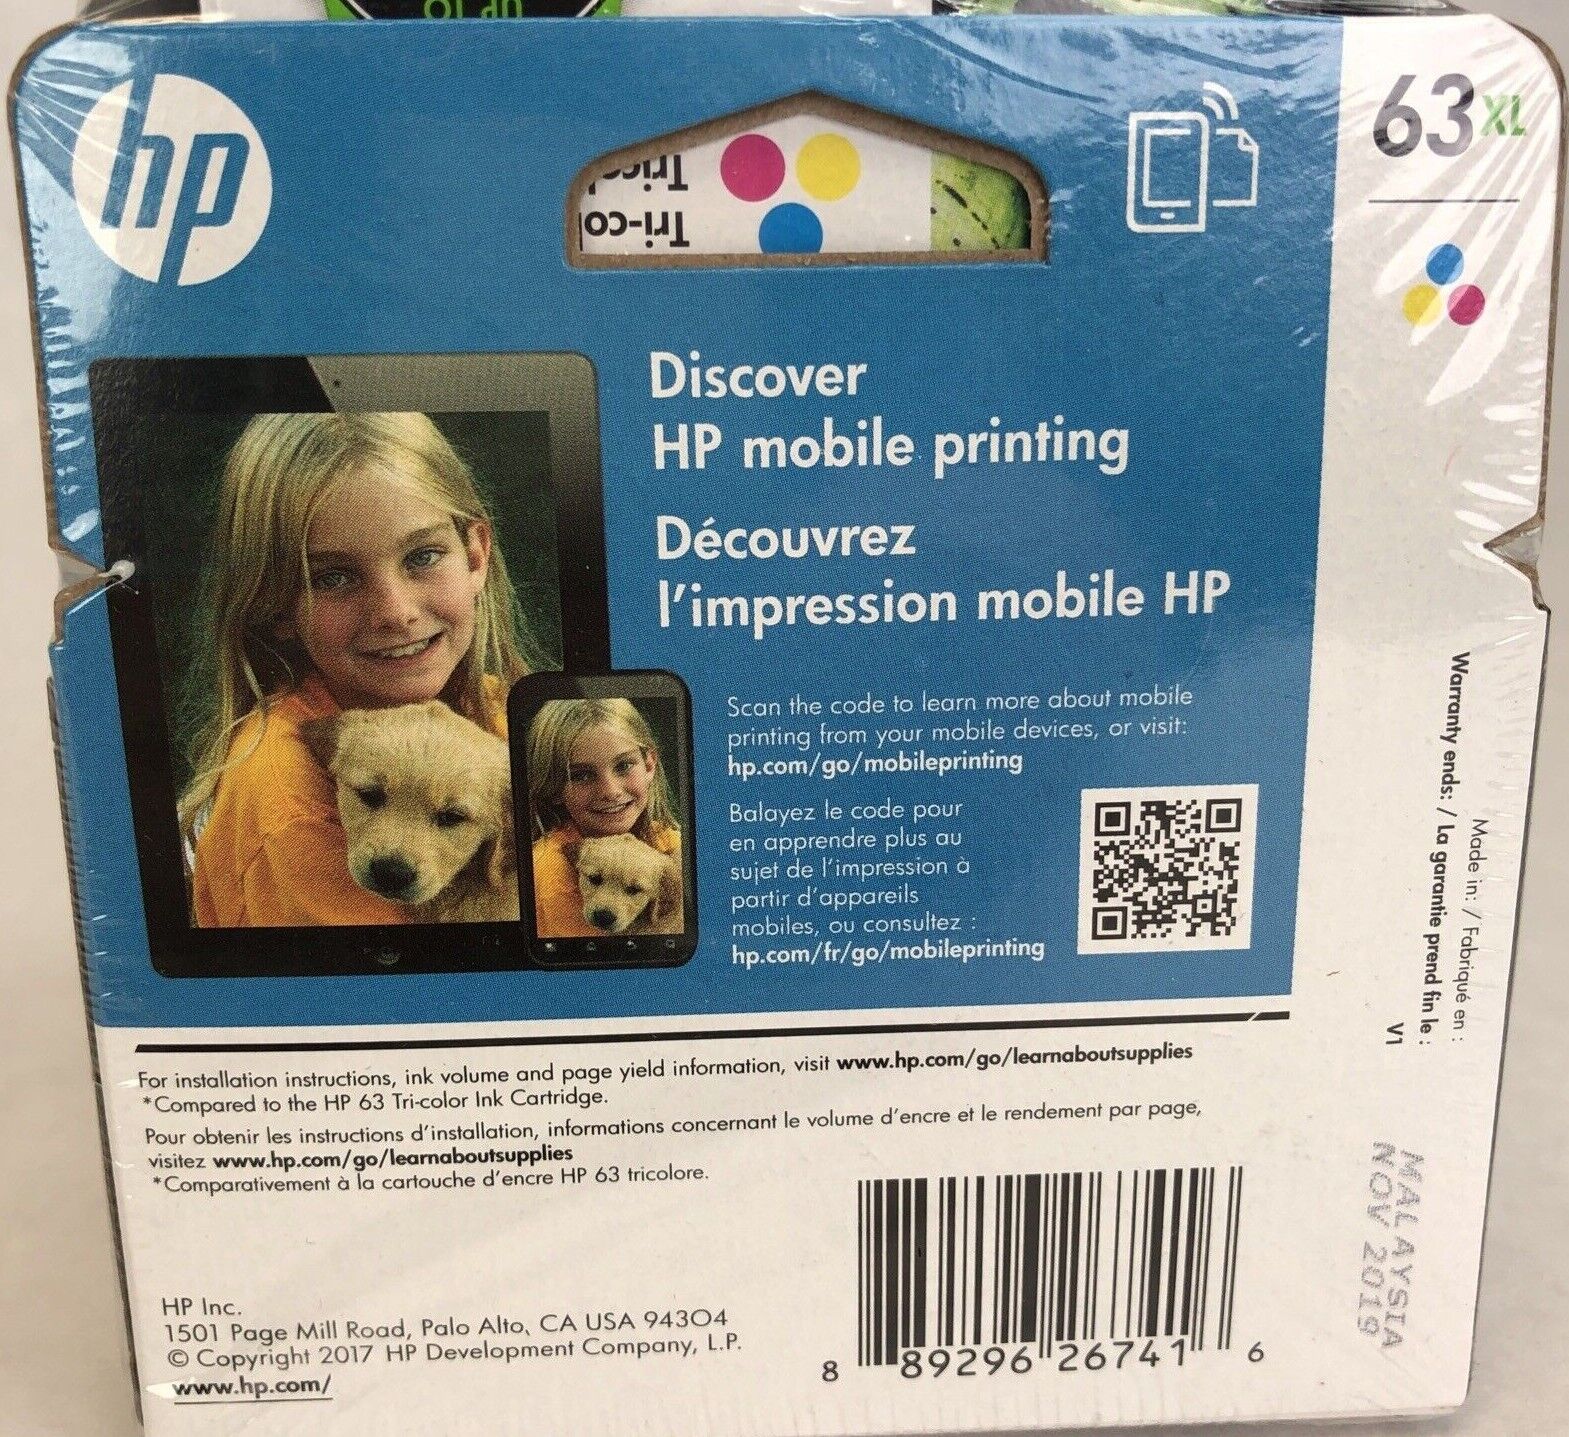 Sealed HP 63XL Color Ink Cartridge 4 Pack